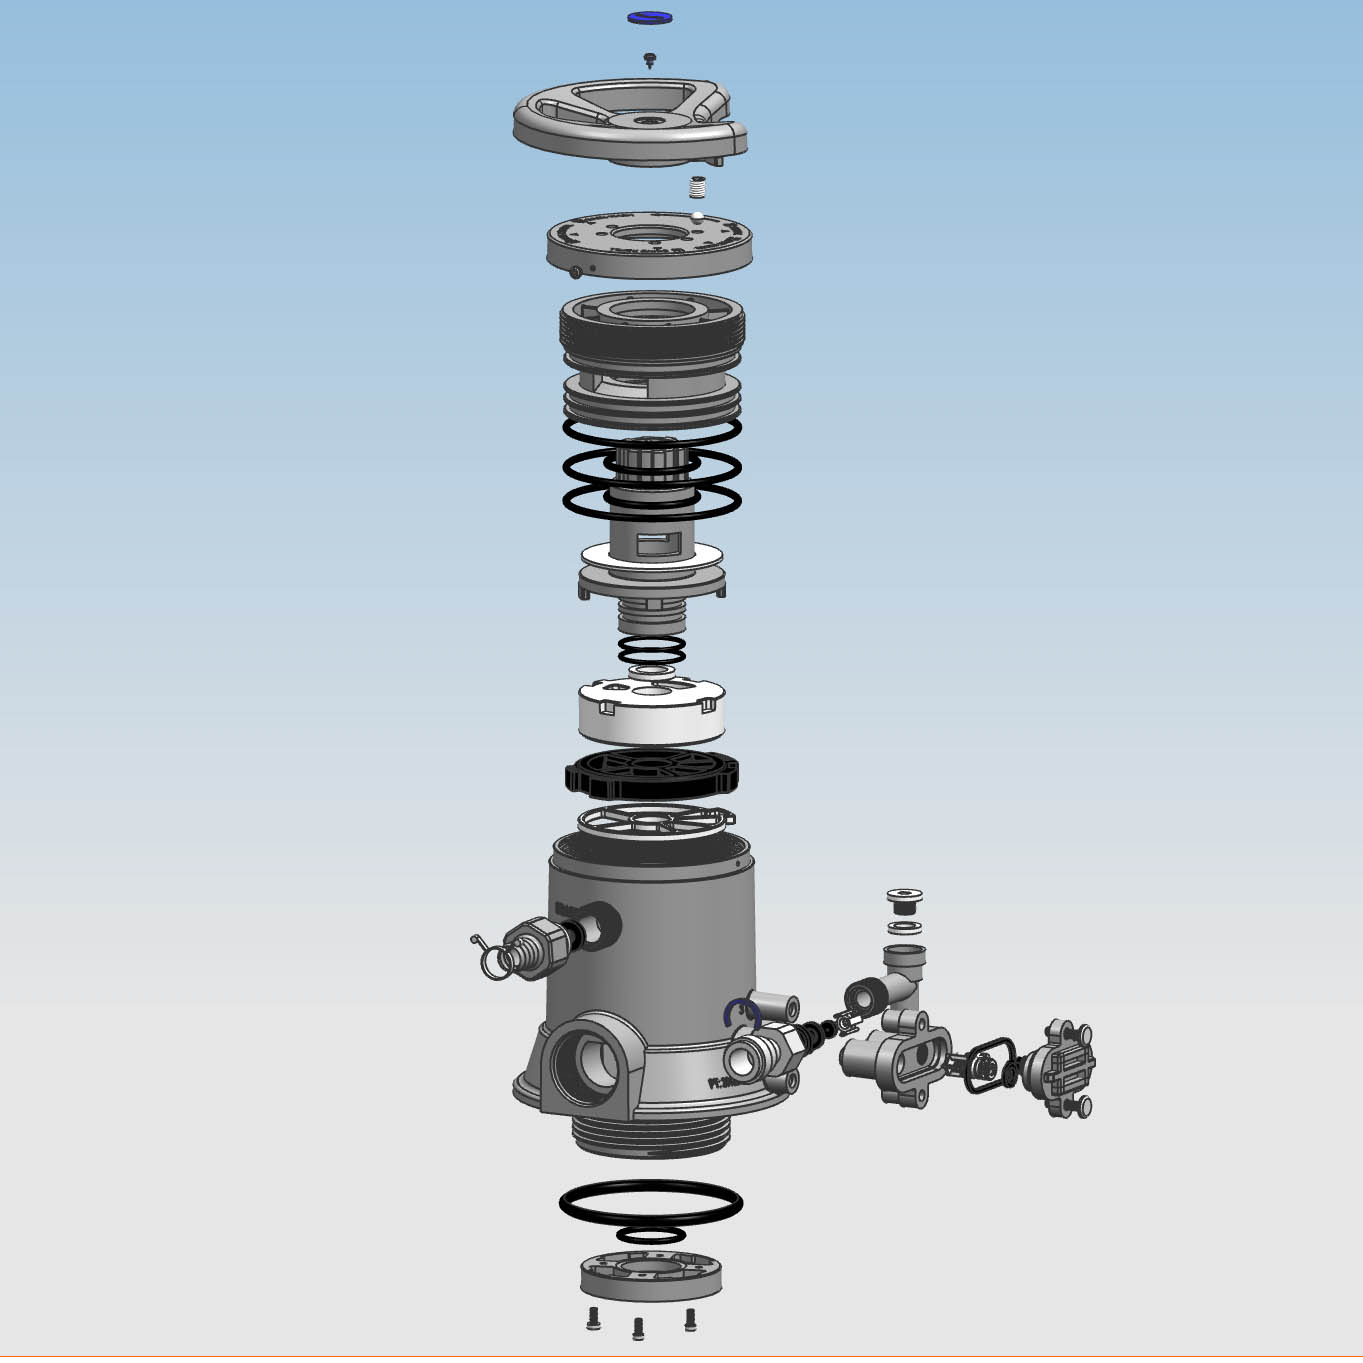 MSS2 2 ton Manual softener valve of Refil the softener water,upflow type